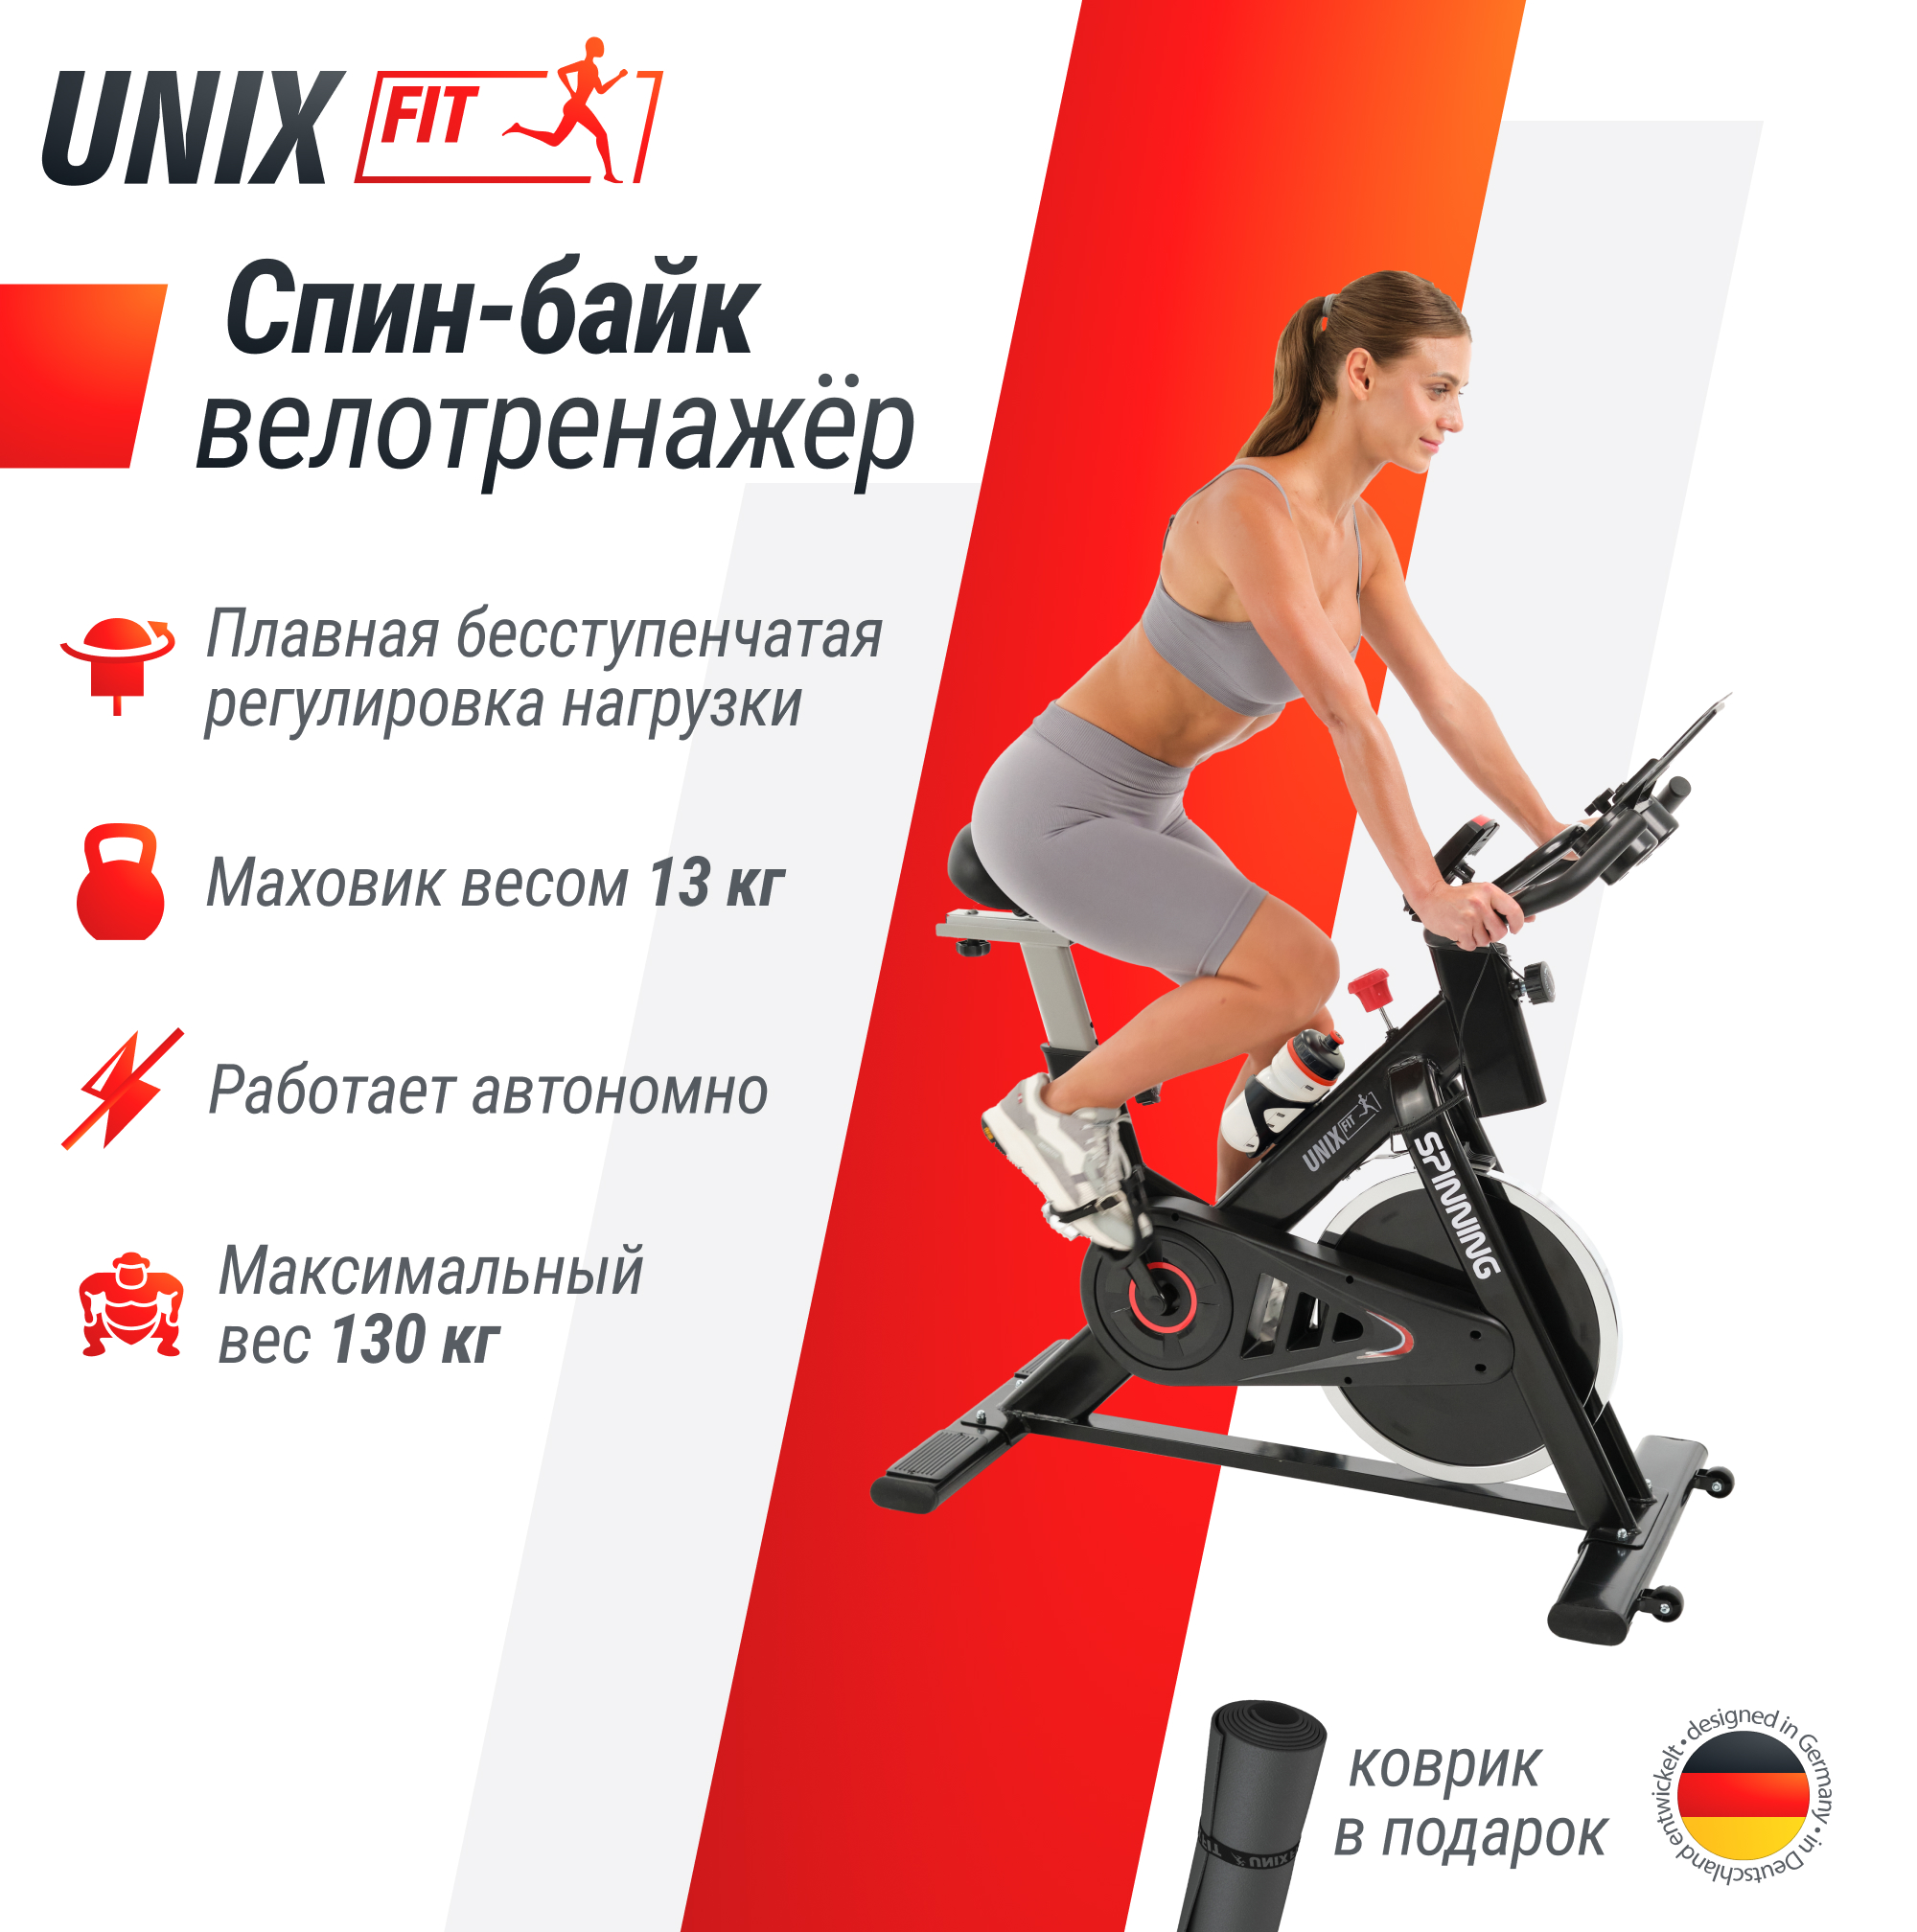 Велотренажер спин-байк UNIX Fit SB-520 PRO для дома,КОВРИК В ПОДАРОК, до 130 кг